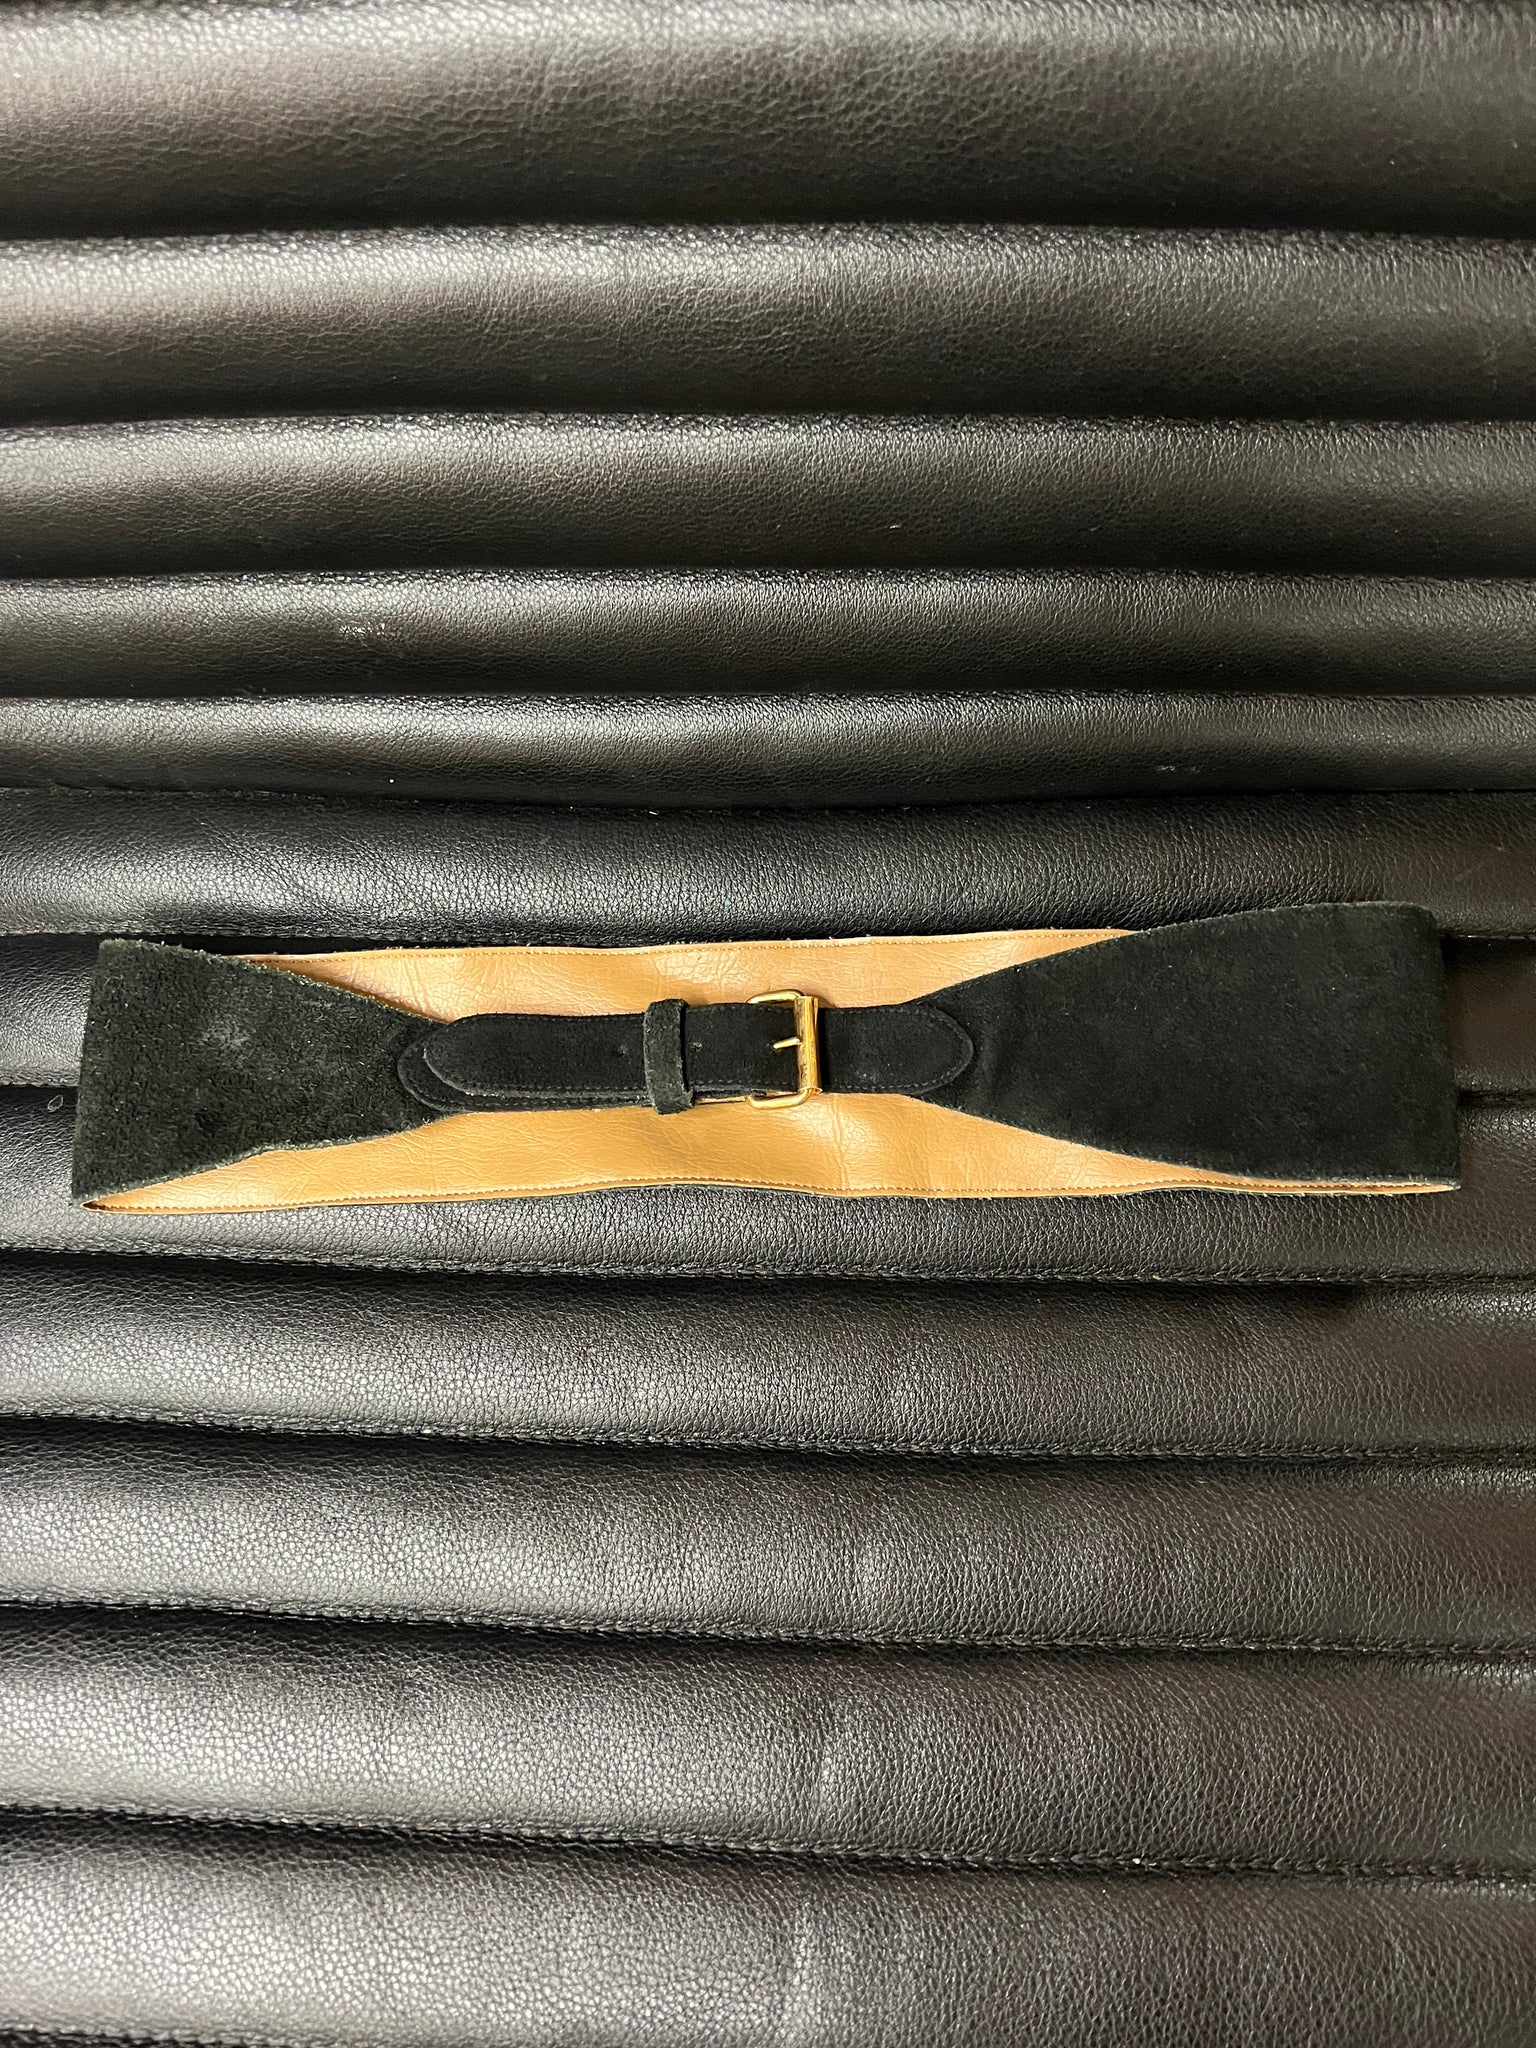 1980s ACCESSORIES-BELTS- black suede waist cincher belt